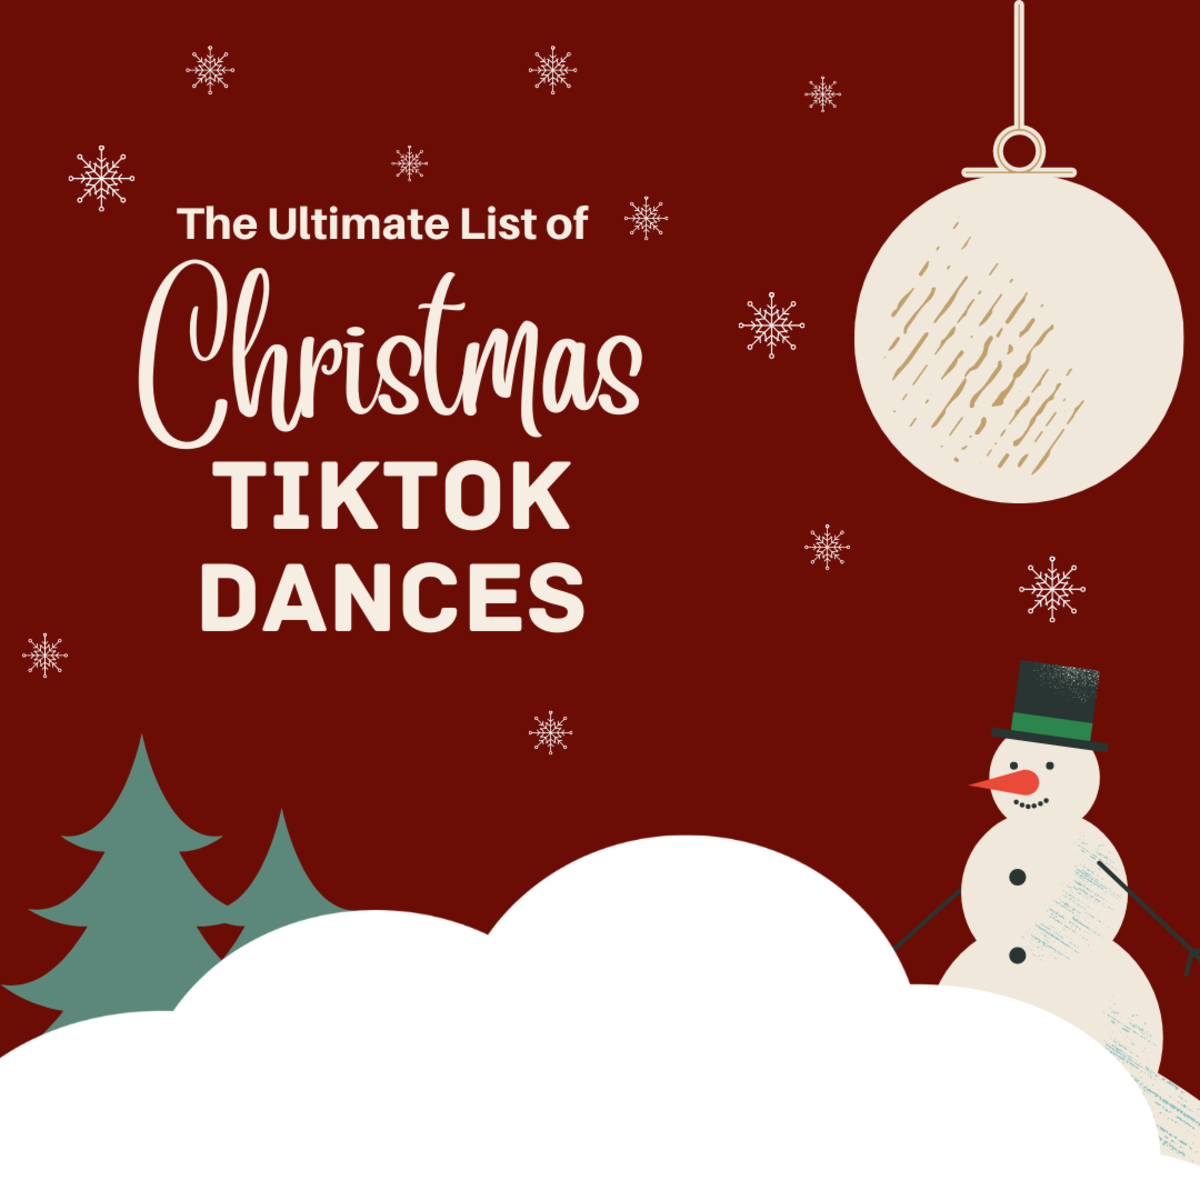 The Ultimate List of Christmas TikTok Dances